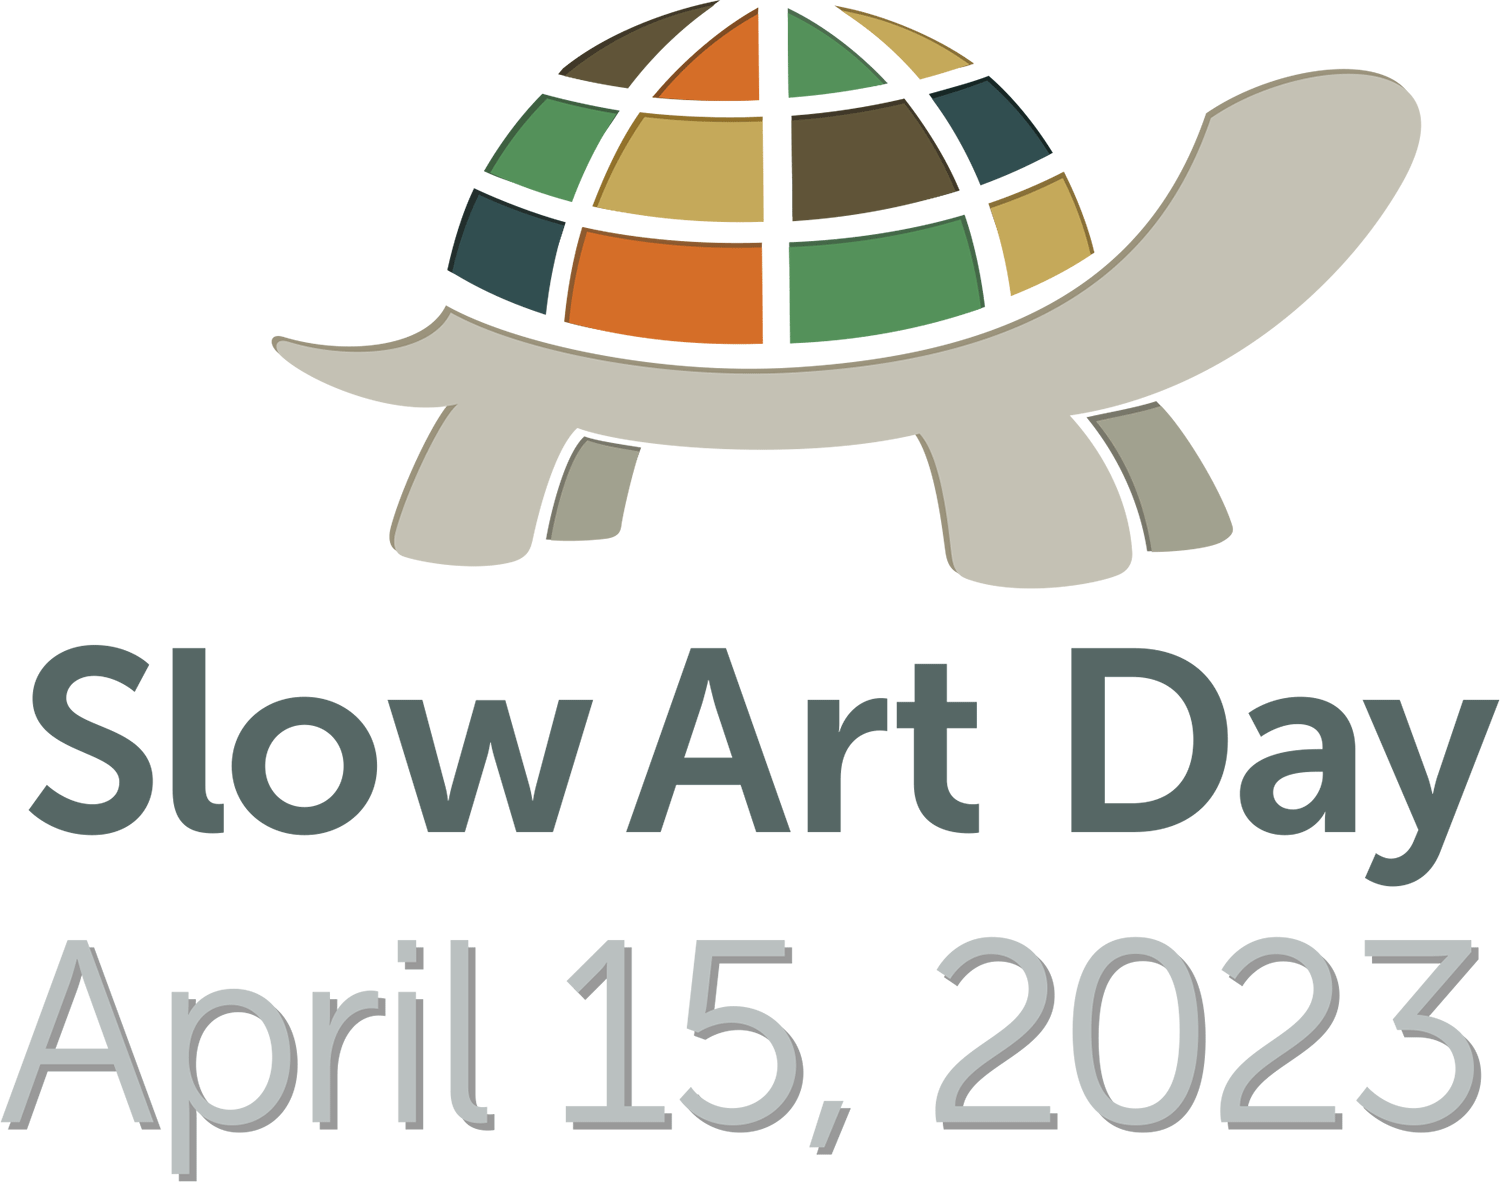 Slow Art Day